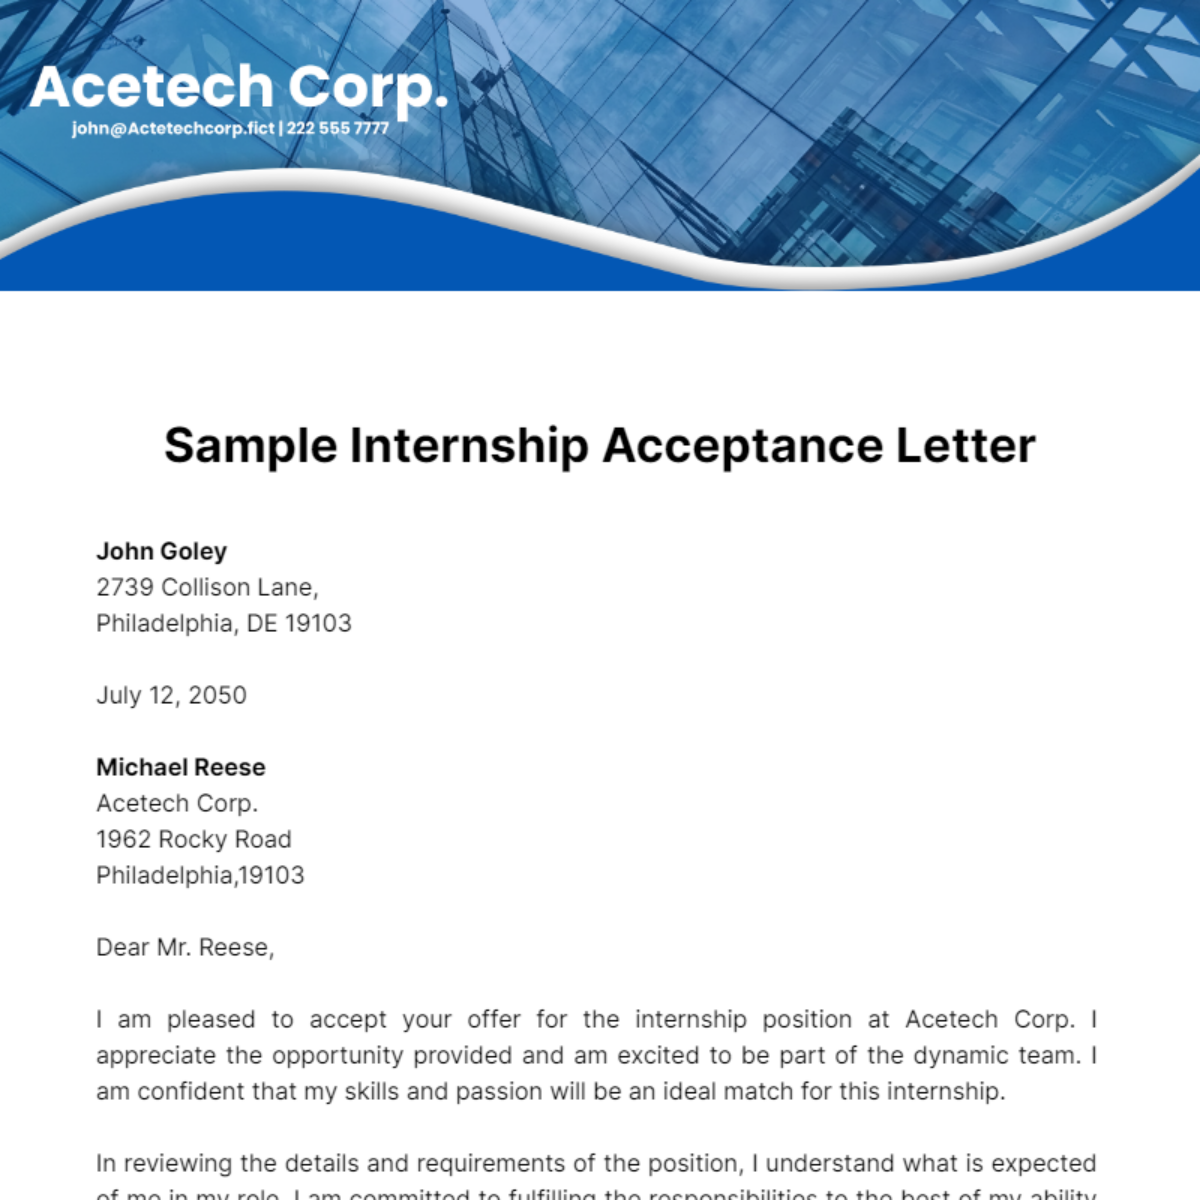 Sample Internship Acceptance Letter Template